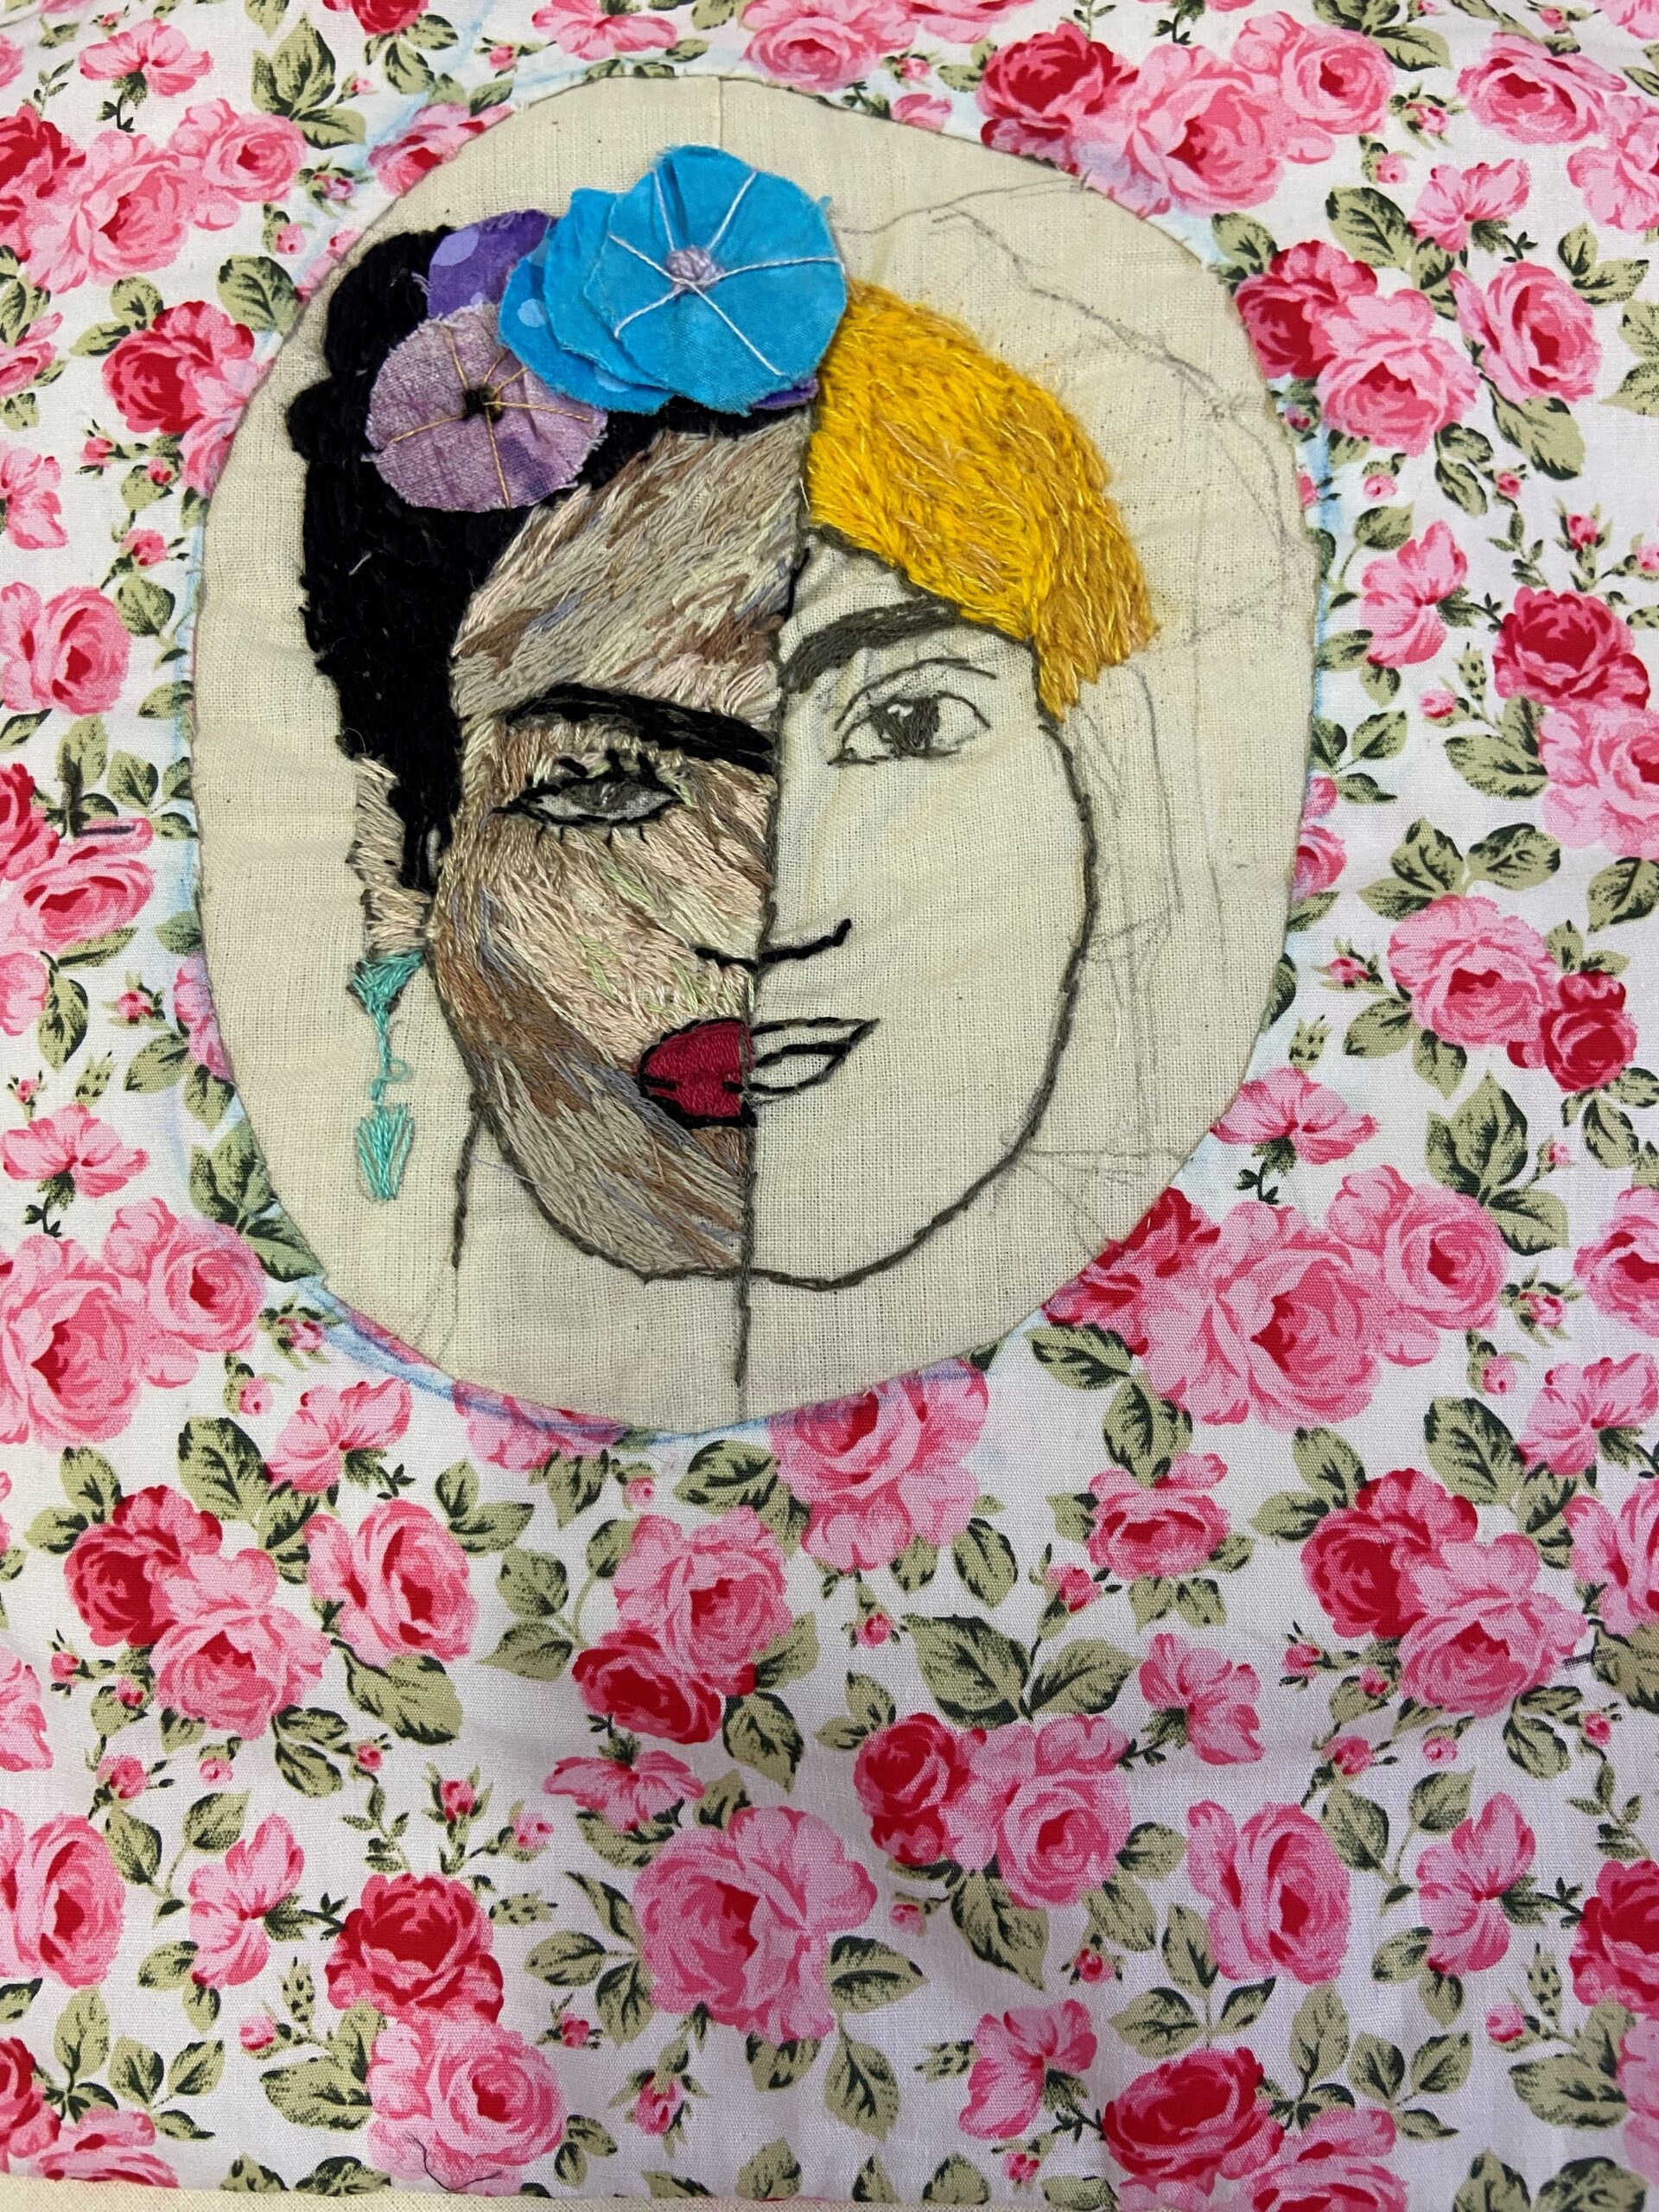 Frida Kahlo-inspired portrait quilt 1.